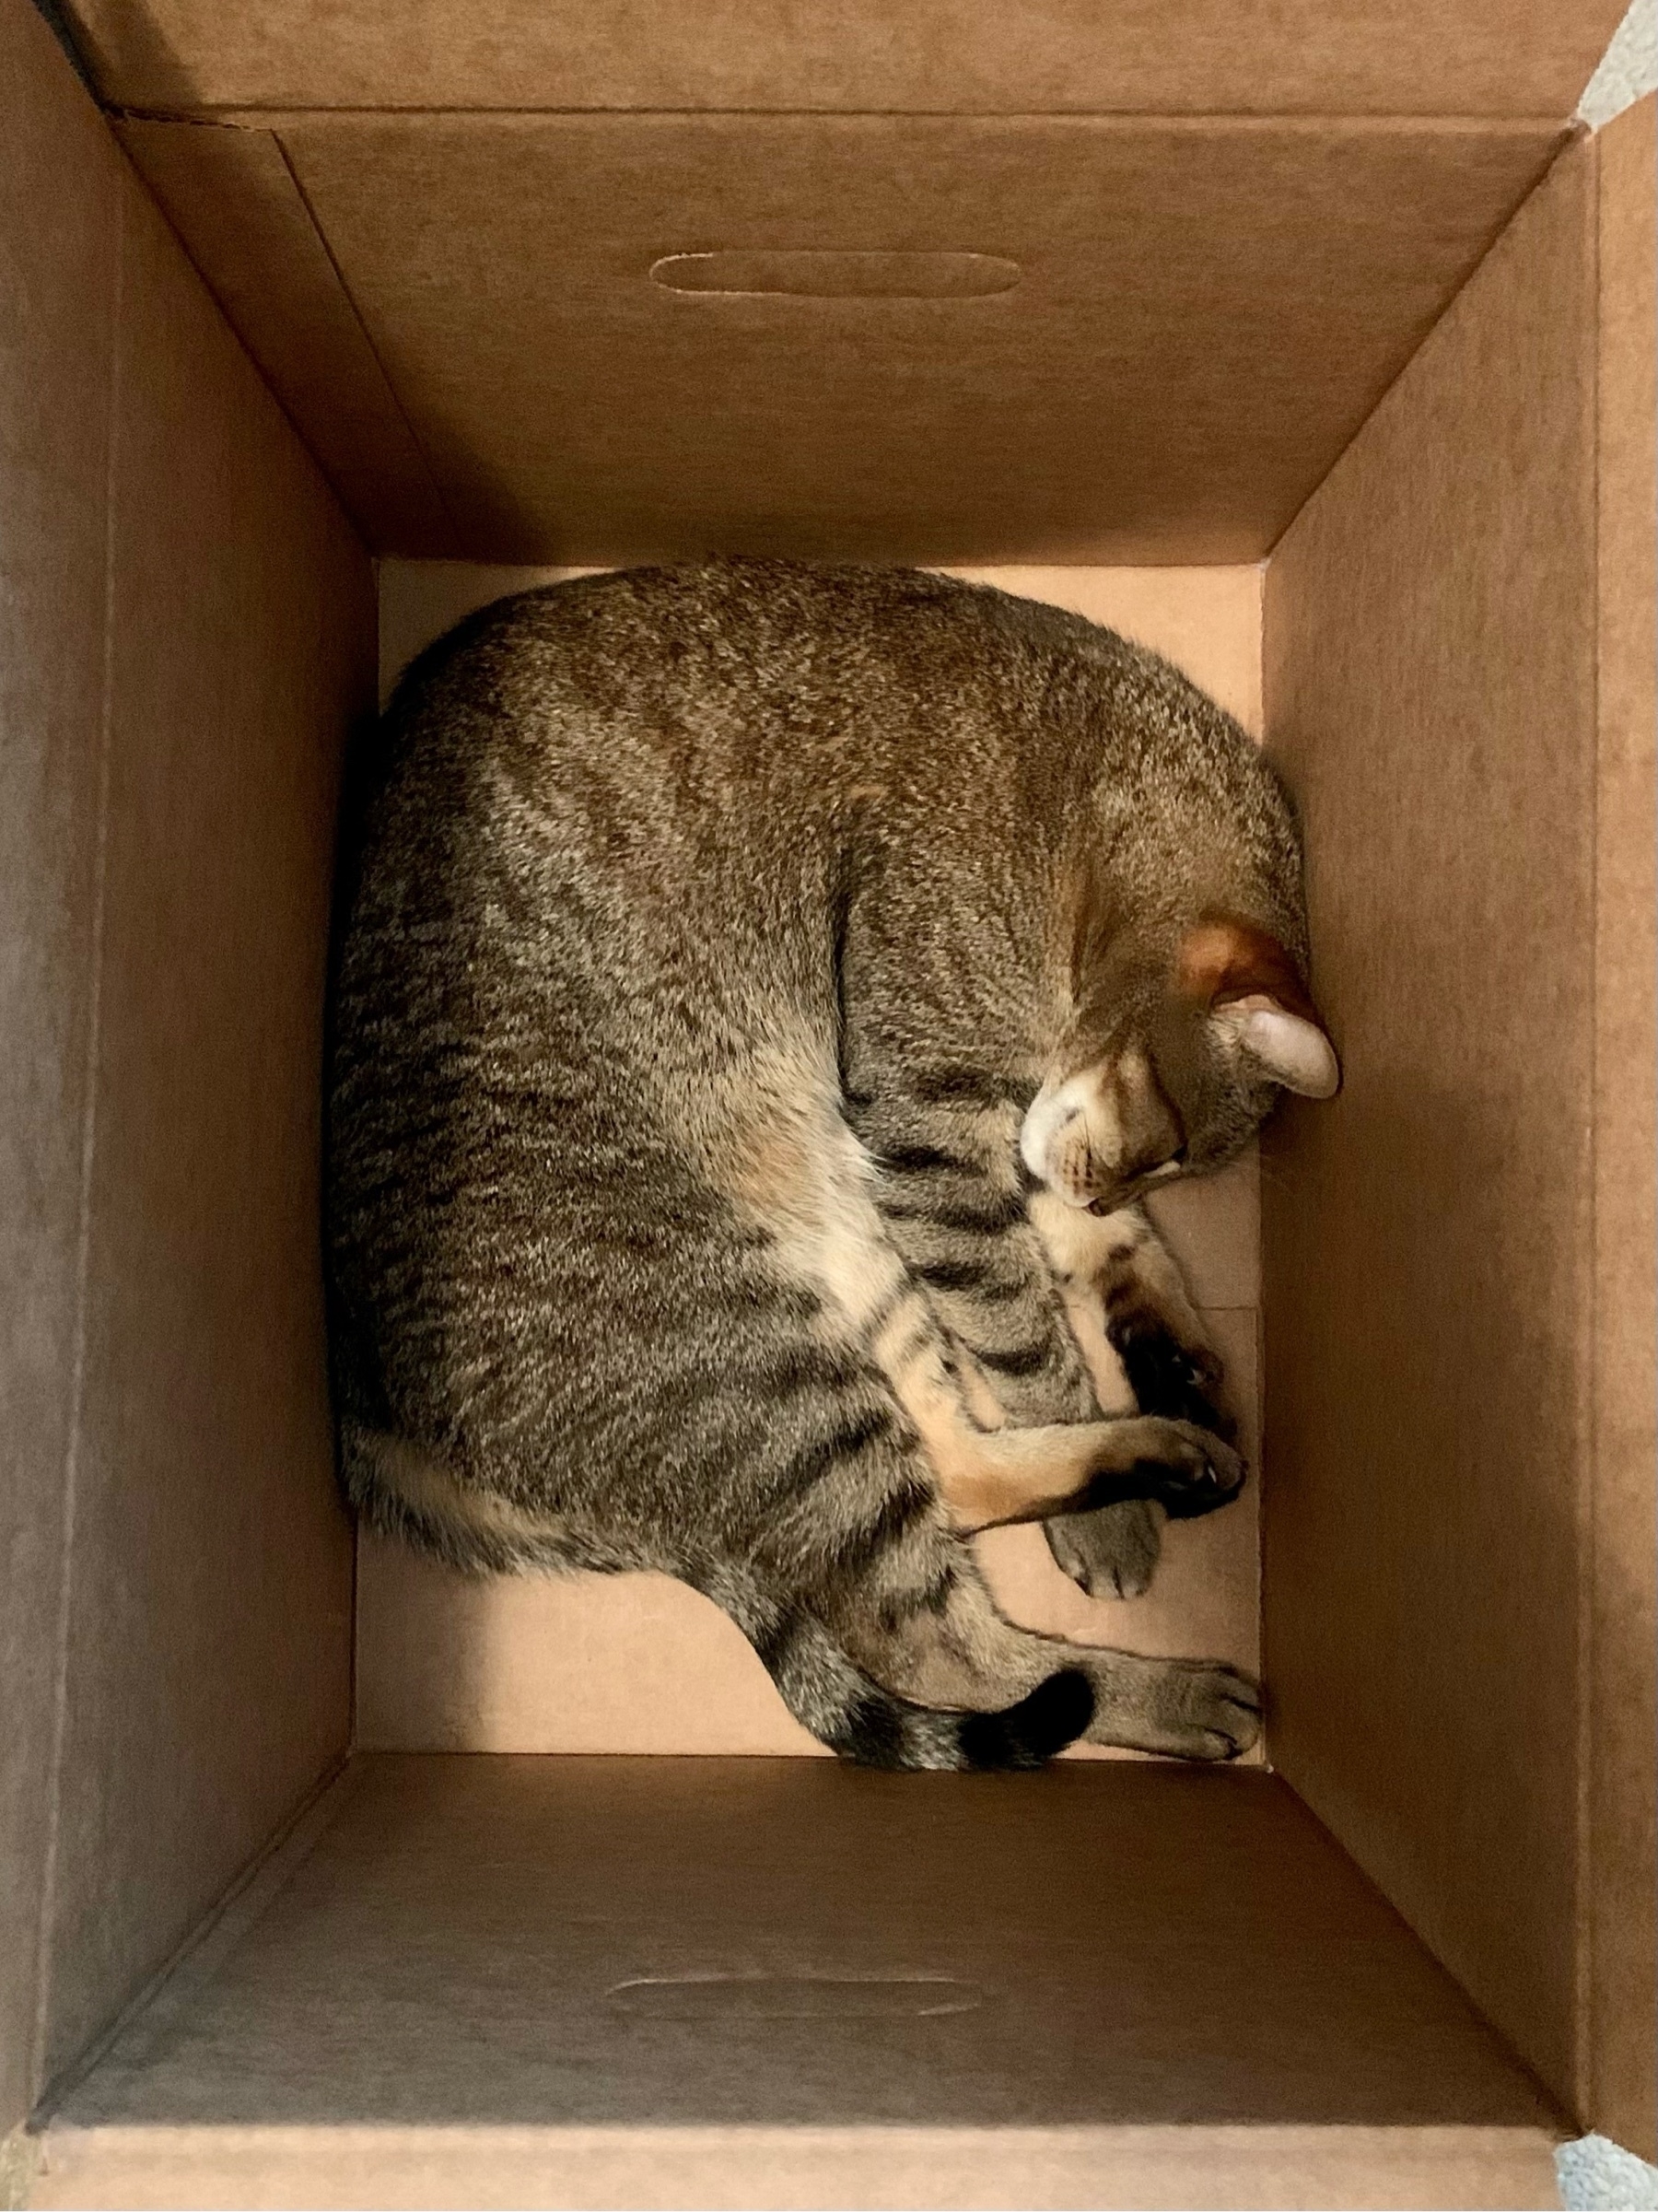 cat sleeping in empty cardboard moving box